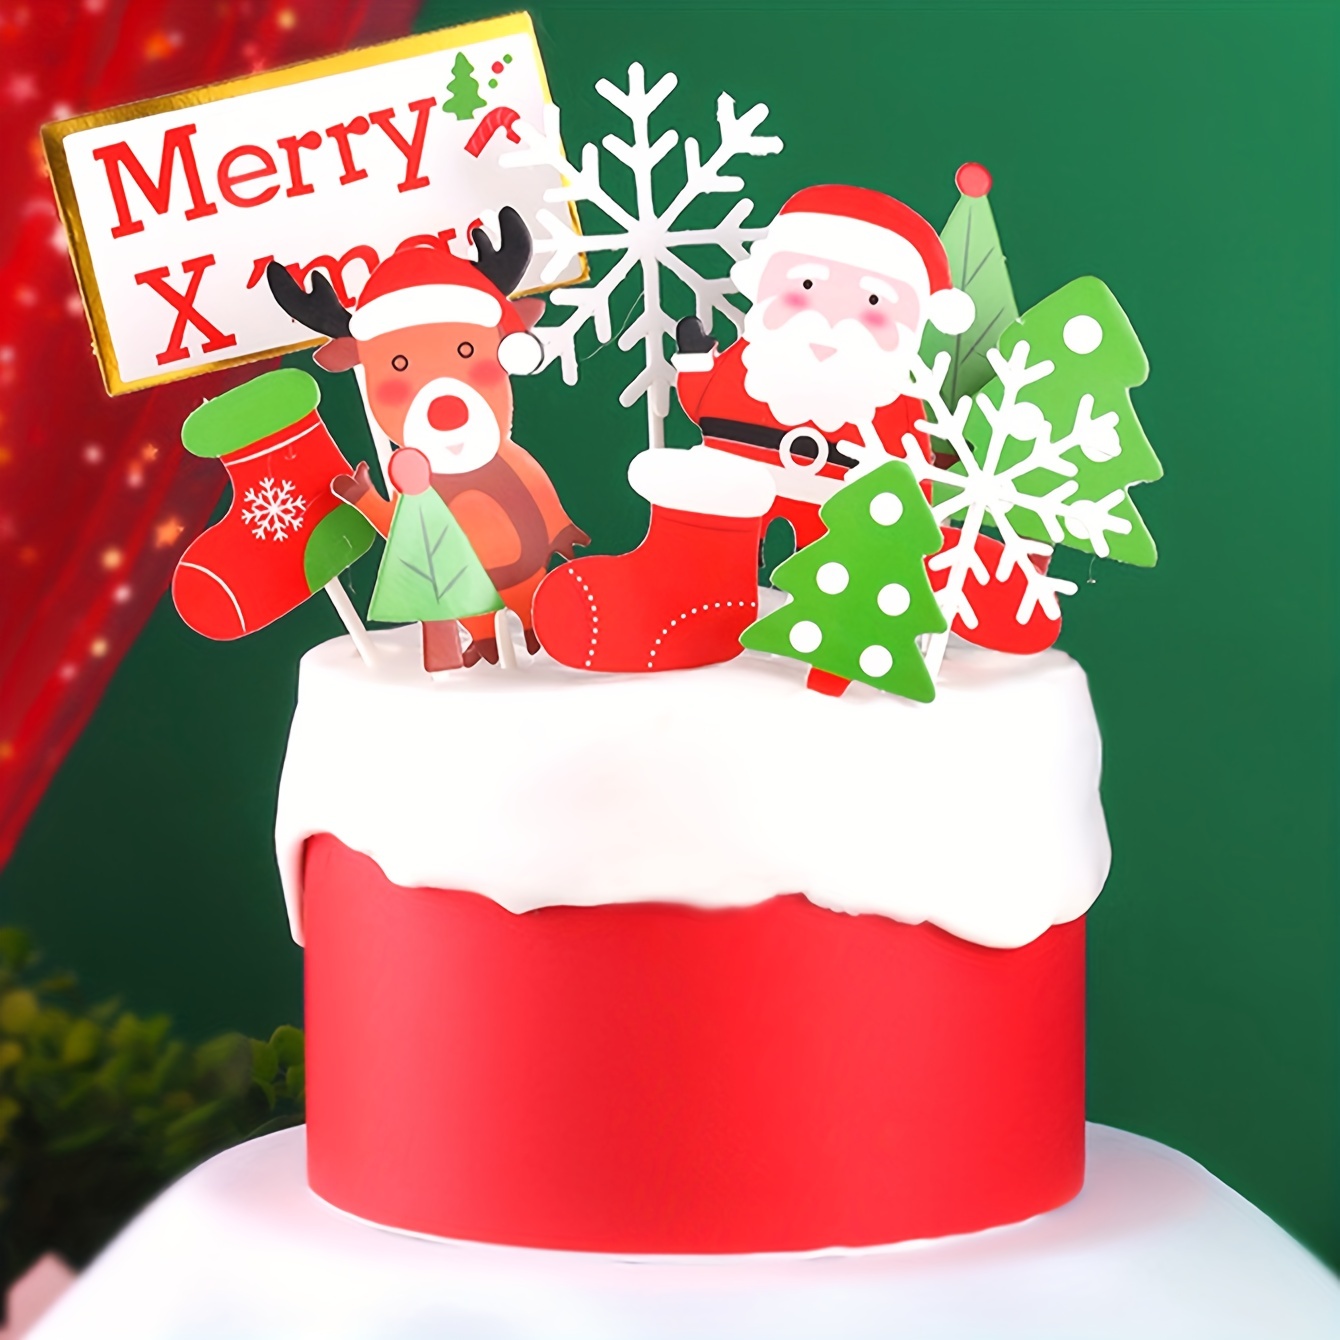 Best Santa Christmas Cake Tutorials - Santa claus Cakes